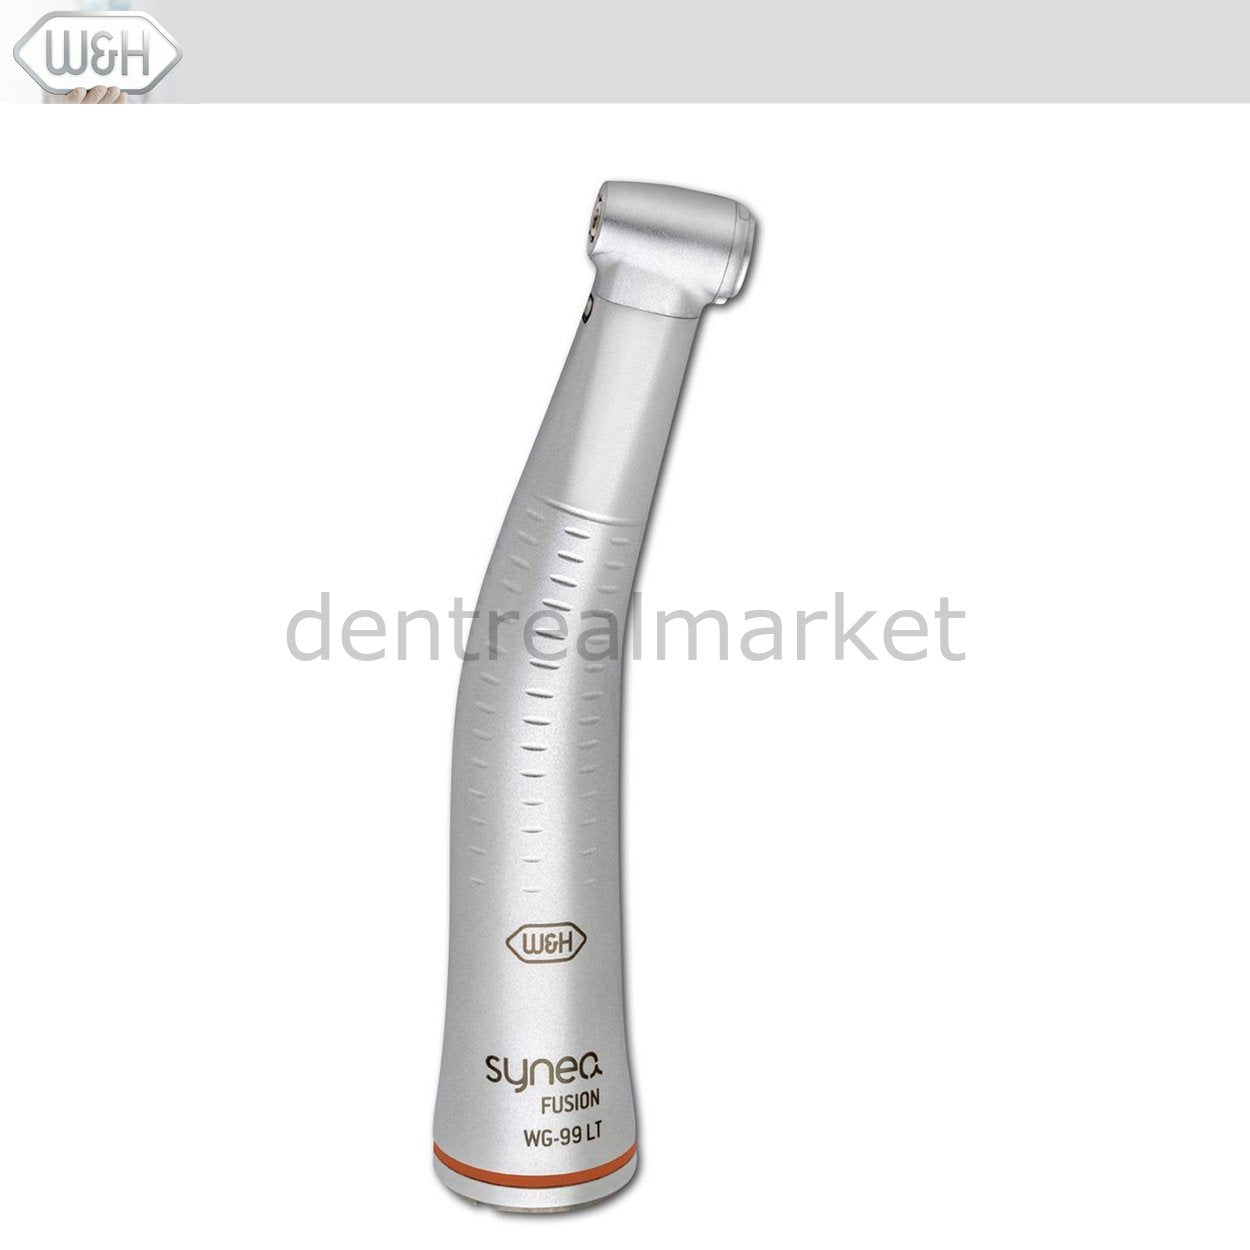 DentrealStore - W&H Dental WG-99 LT Synea Fusion Contra Angle Handpiece with Light